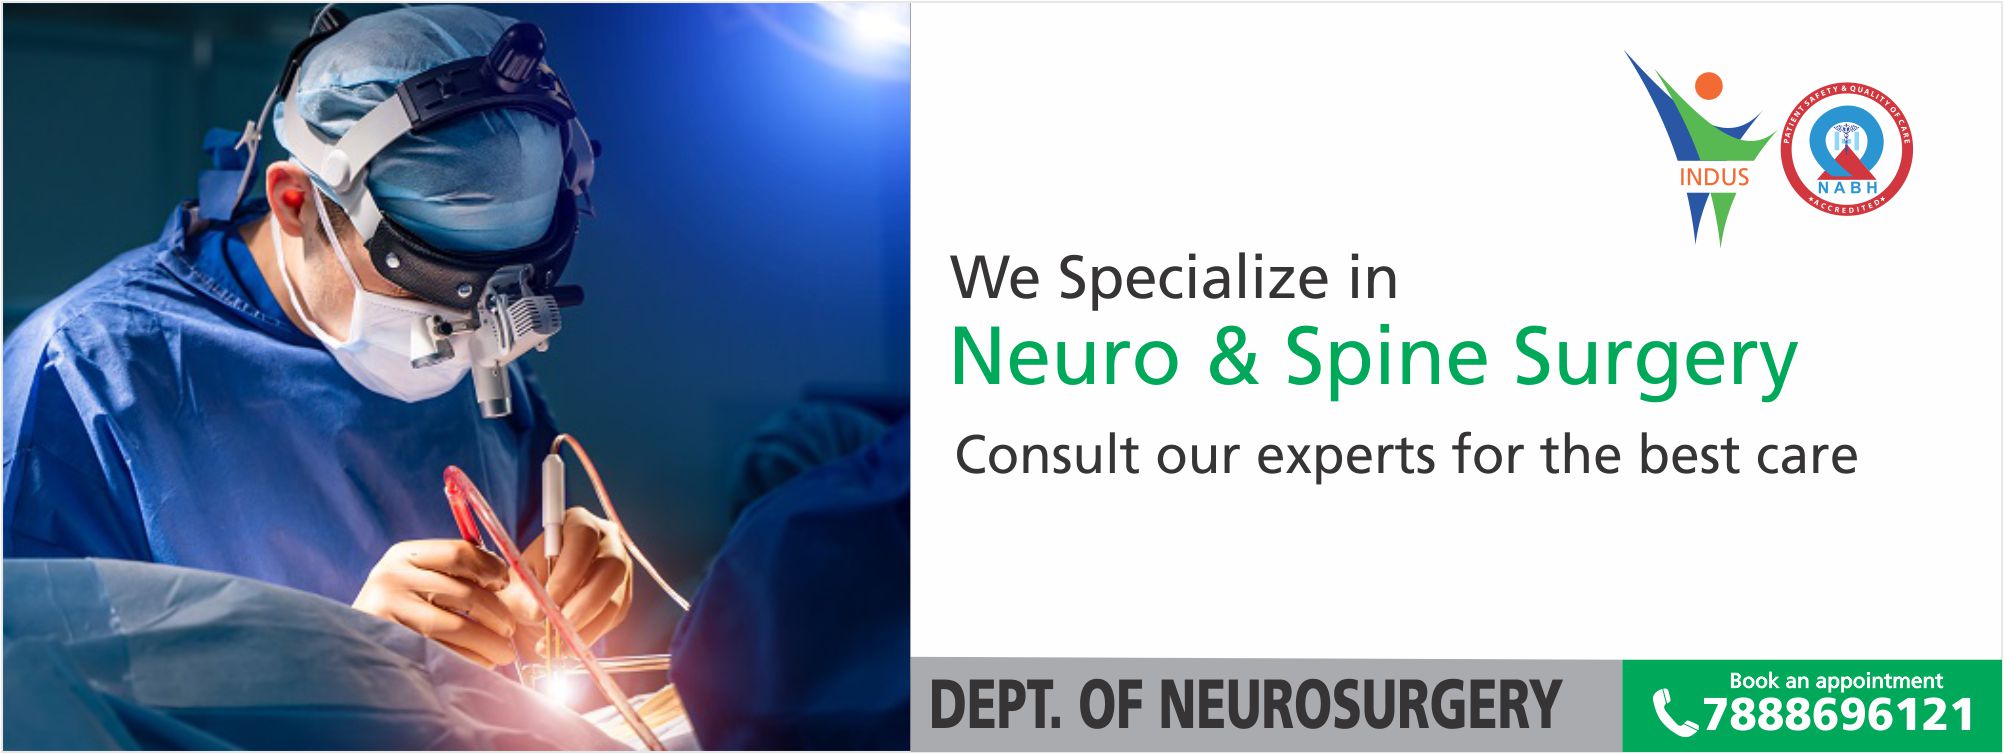 Indus Hospital neurosurgery department